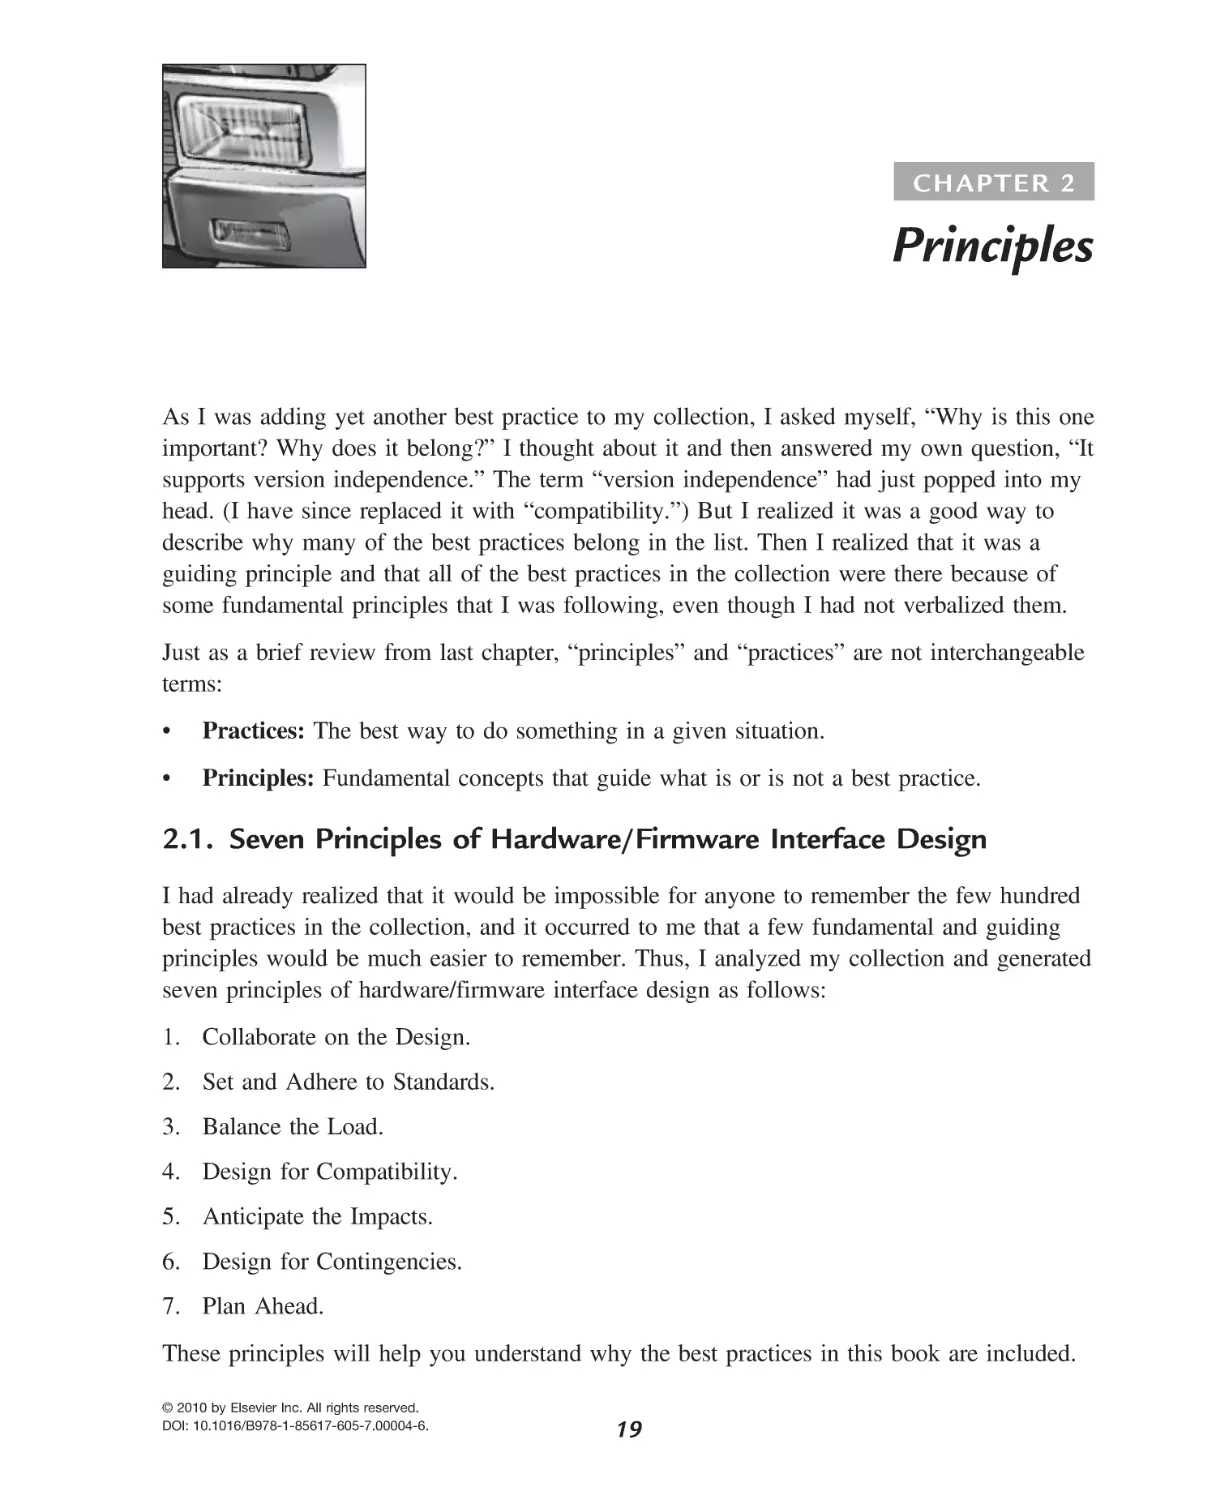 2 Principles
Seven Principles of Hardware/Firmware Interface 
Design